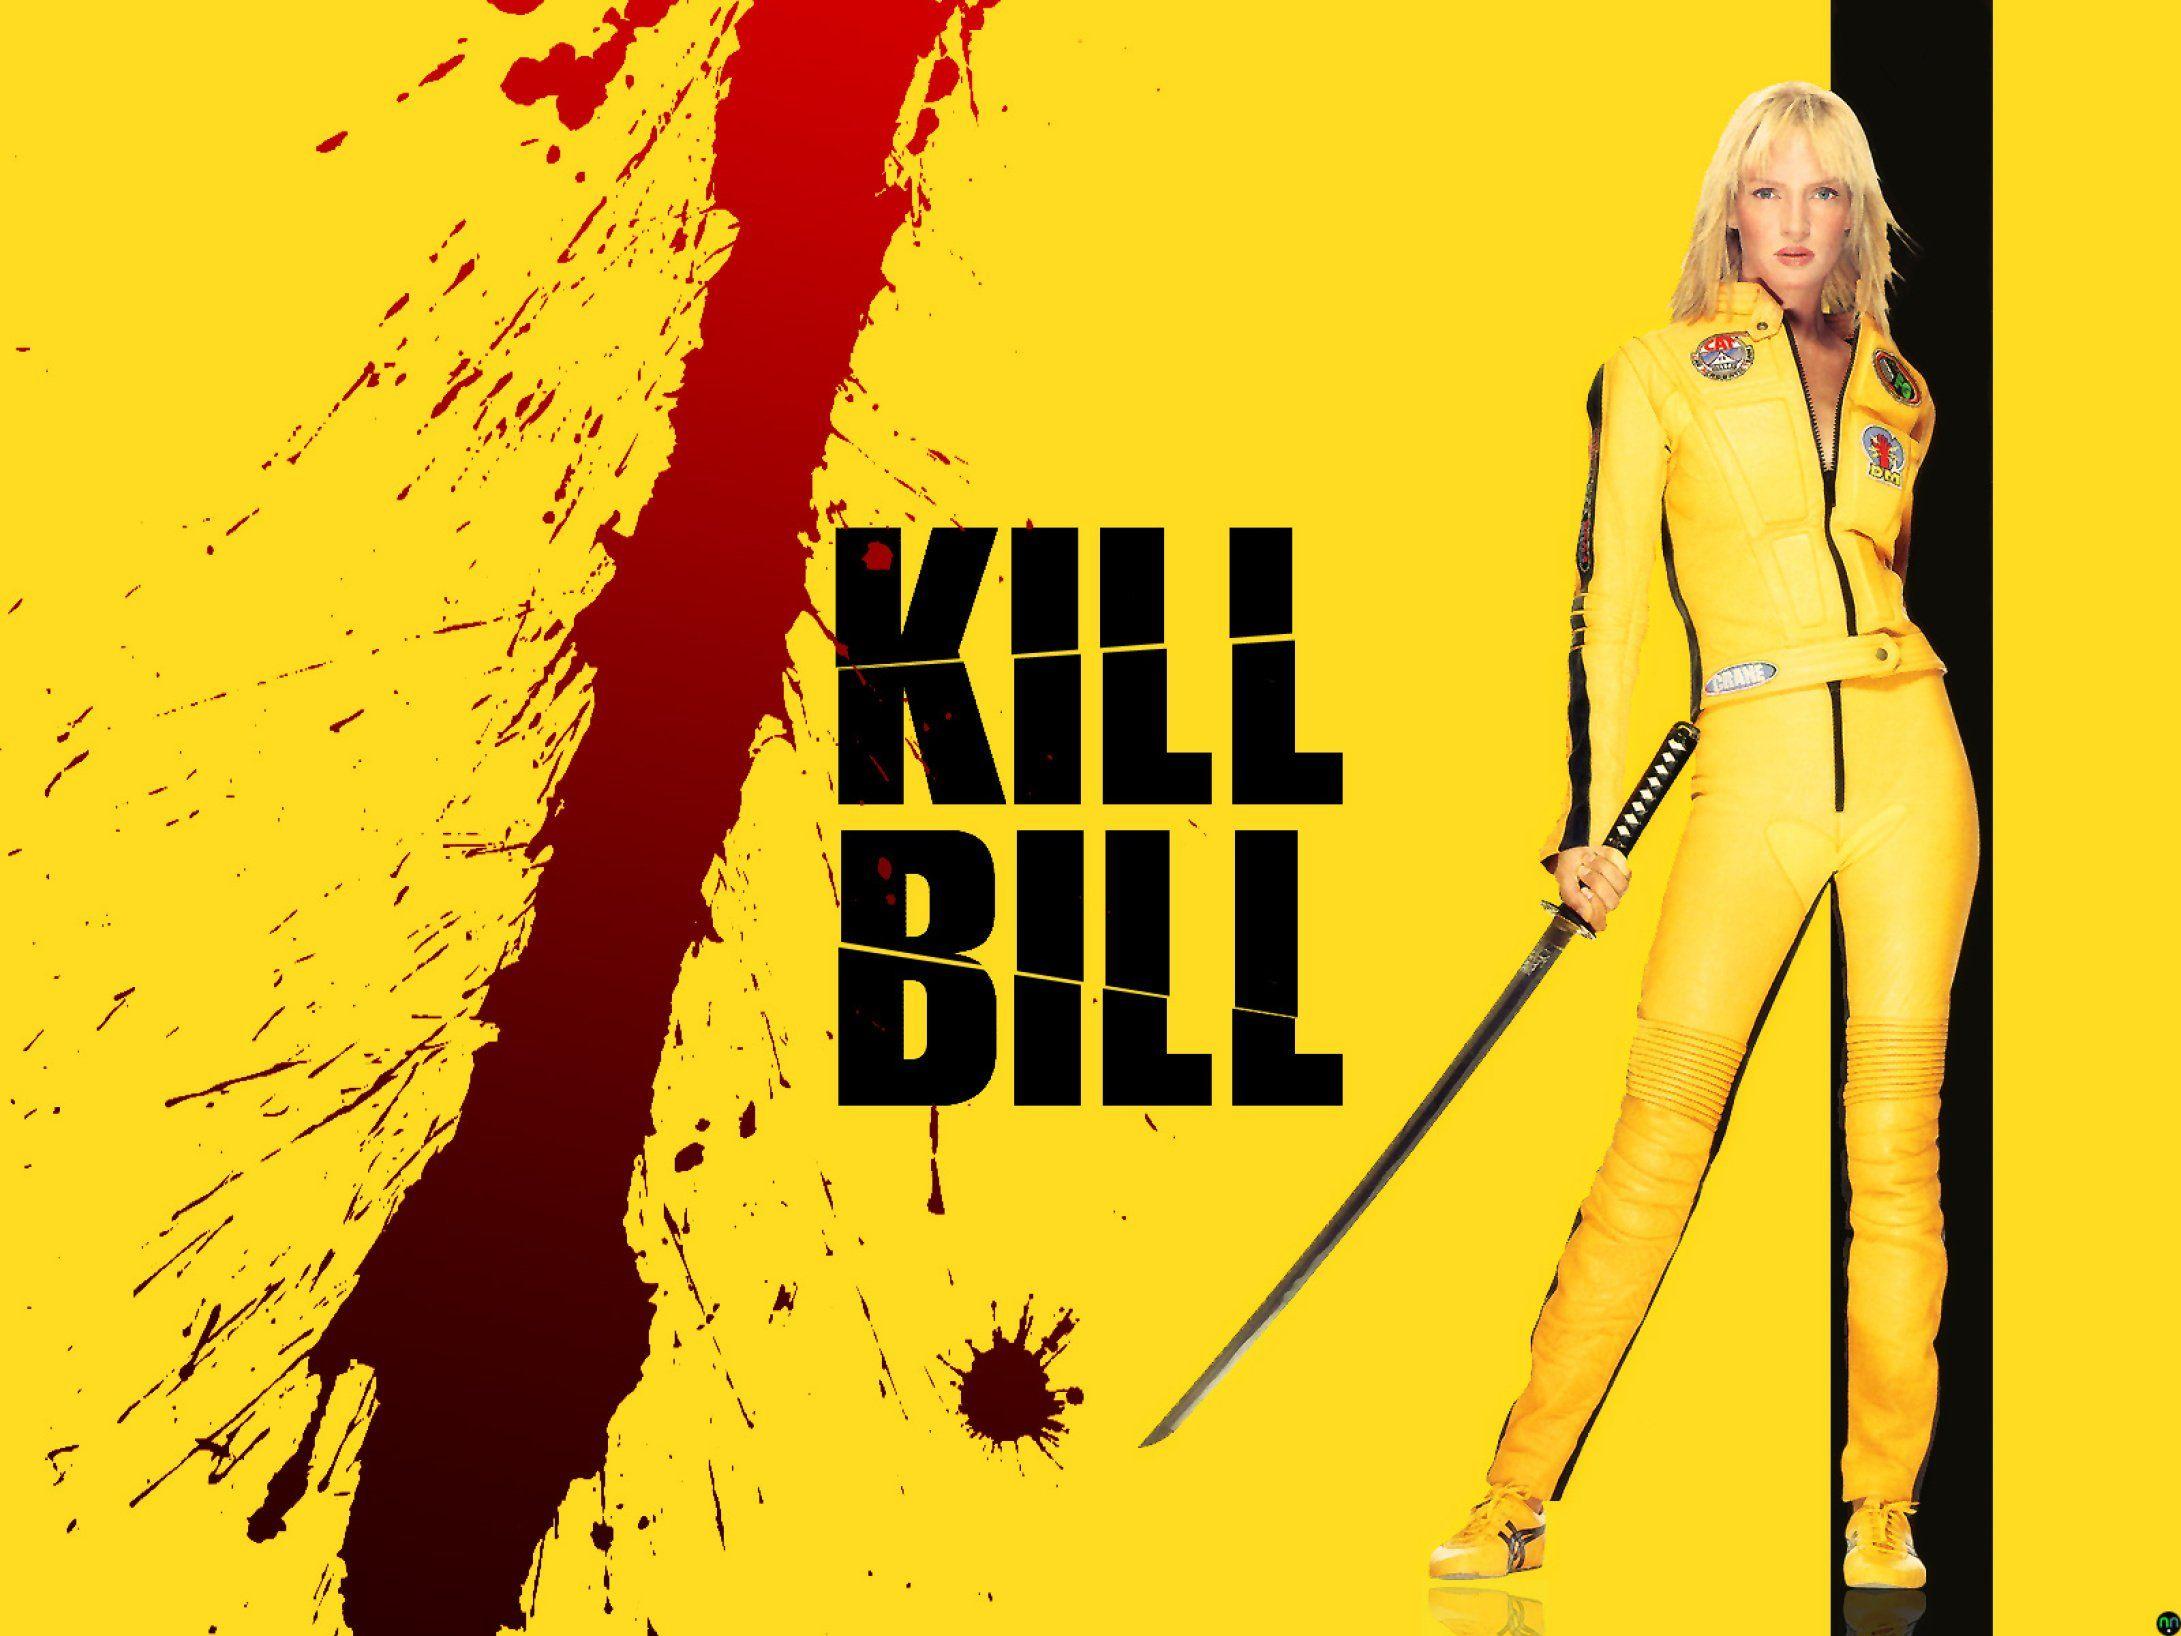 KILL BILL action crime martial arts poster fs wallpaper